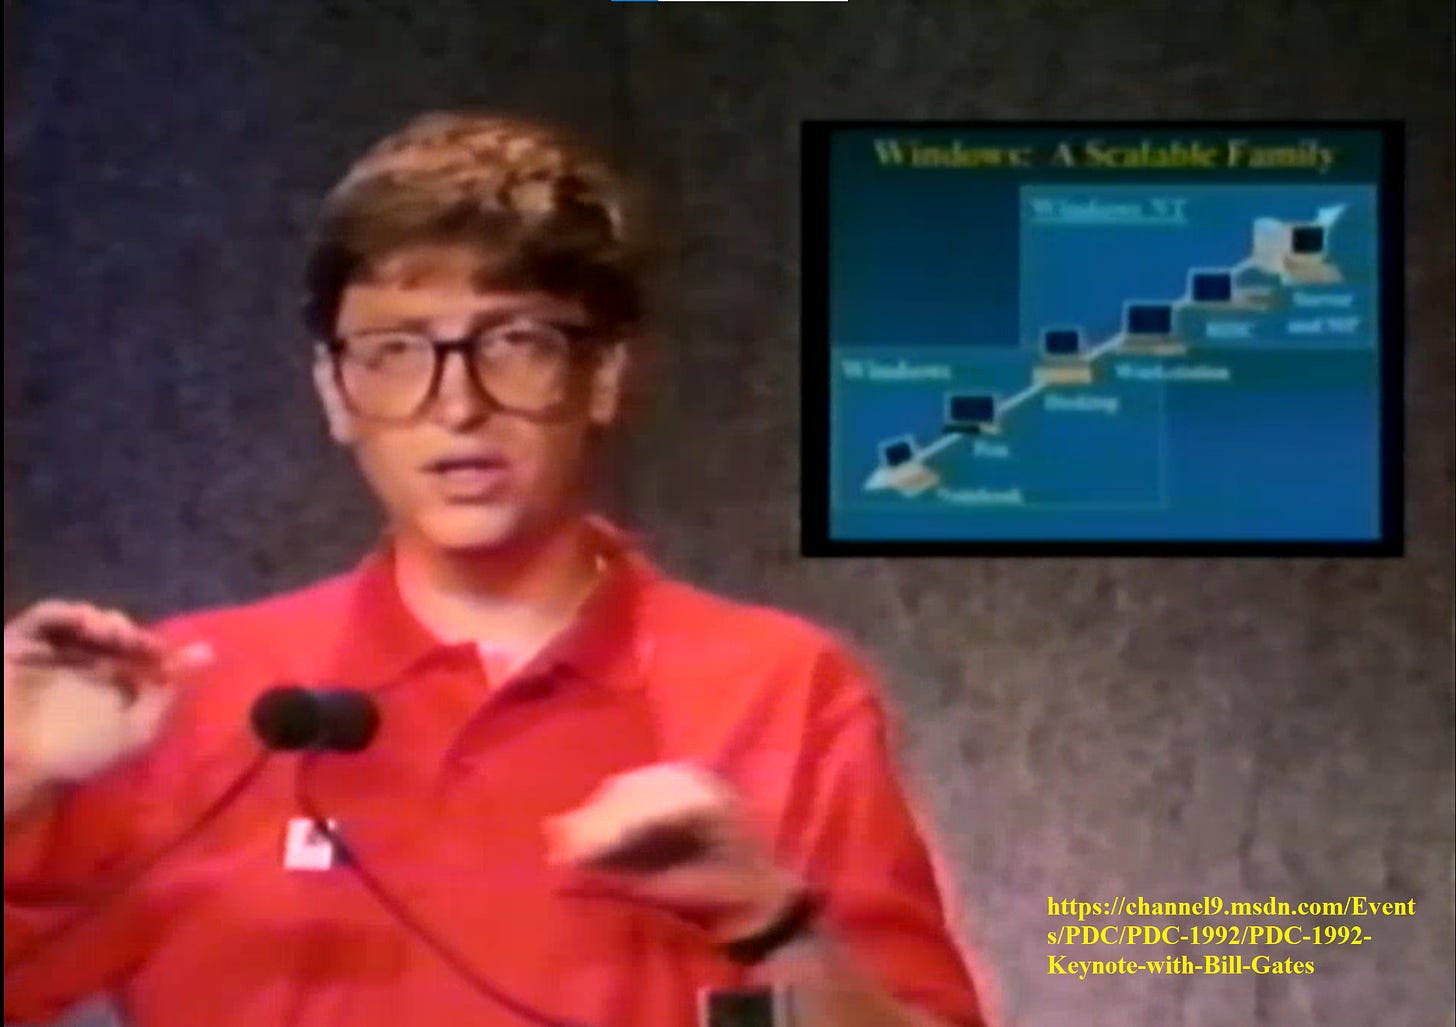 Bill Gates presenting Windows NT 3.1